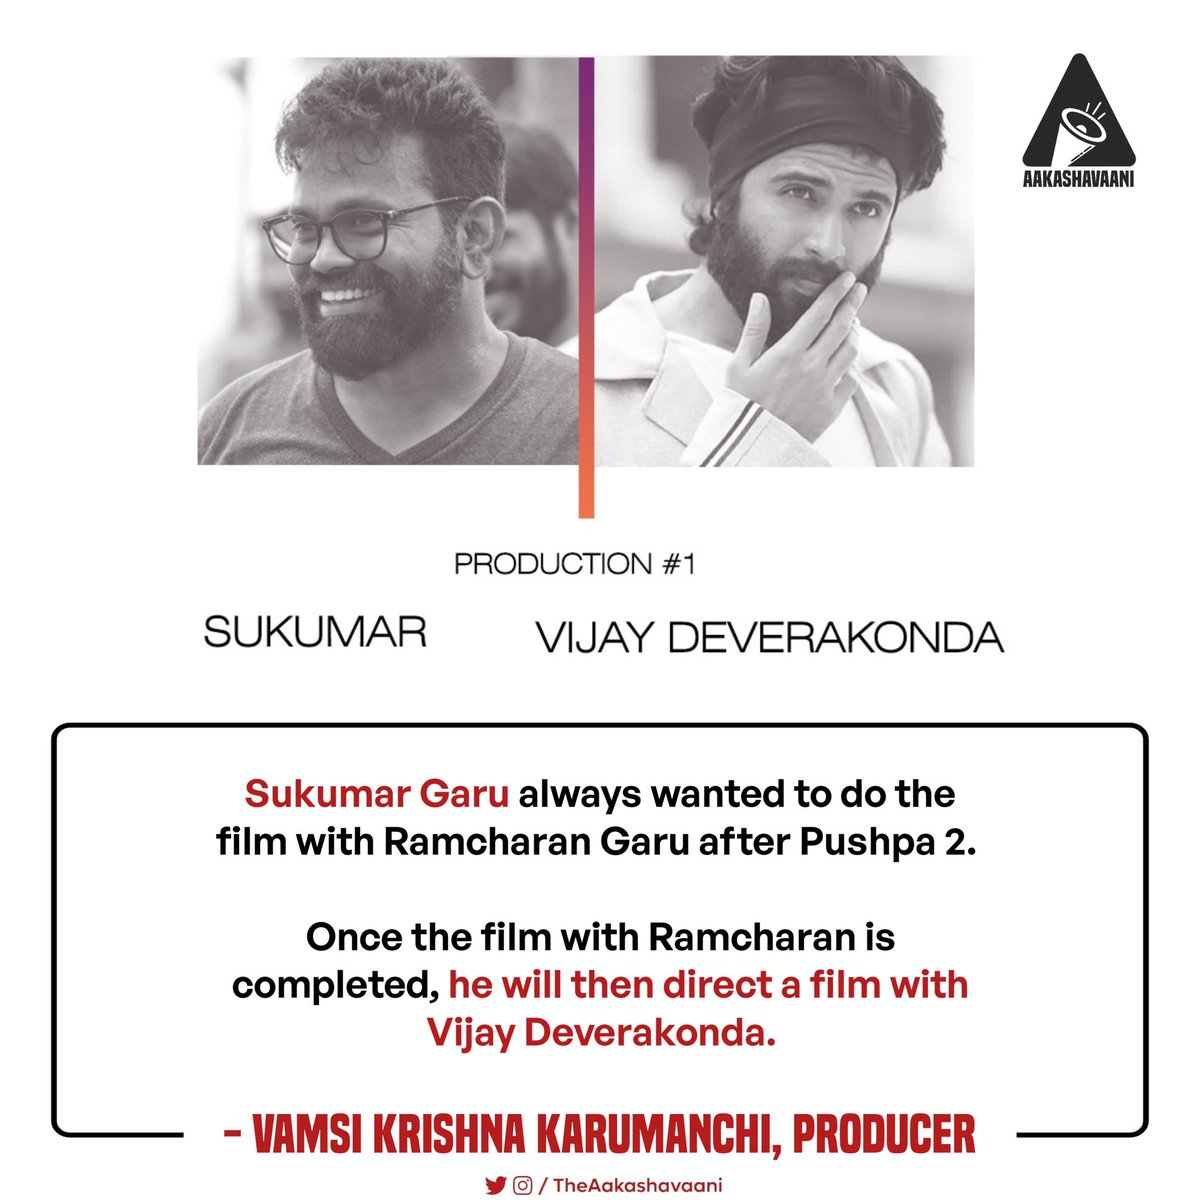 Vamsi Karumanchi, producer, clarification about #RC17 & Vijay Deverakonda movie.